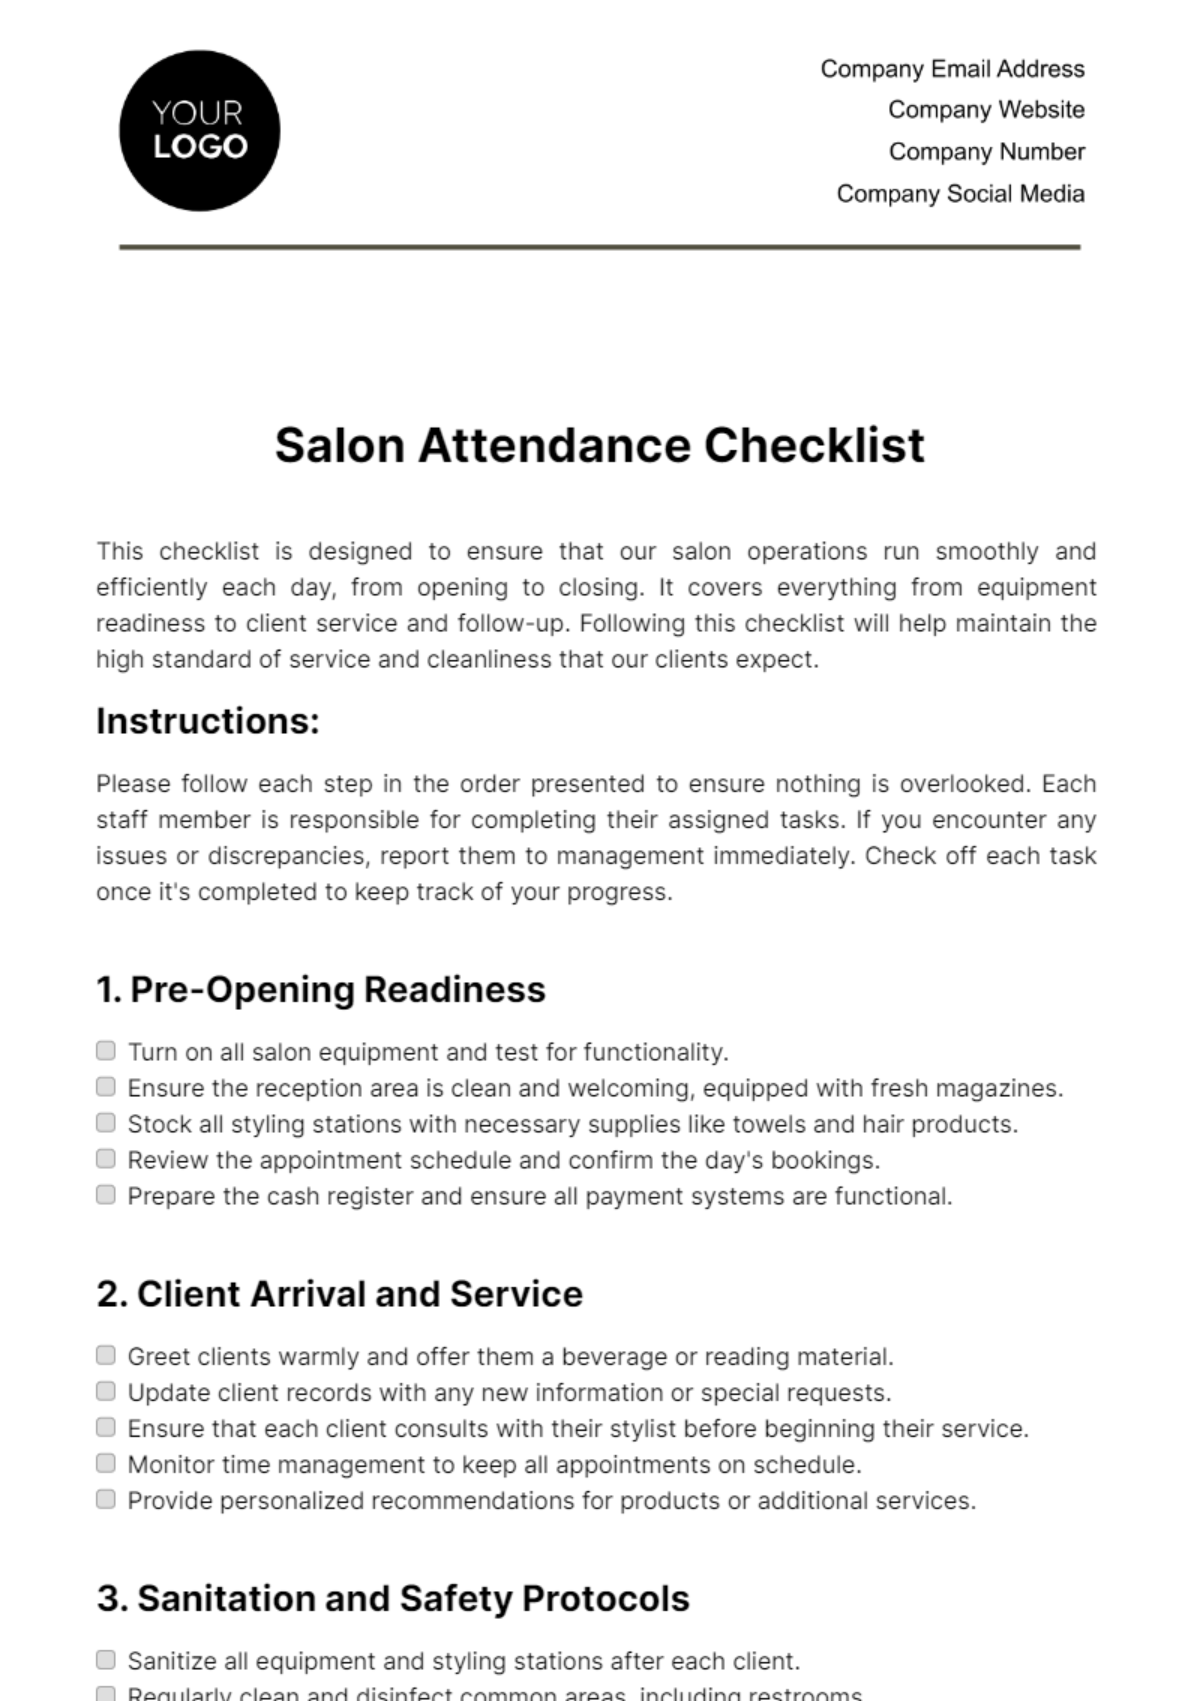 Salon Attendance Checklist Template